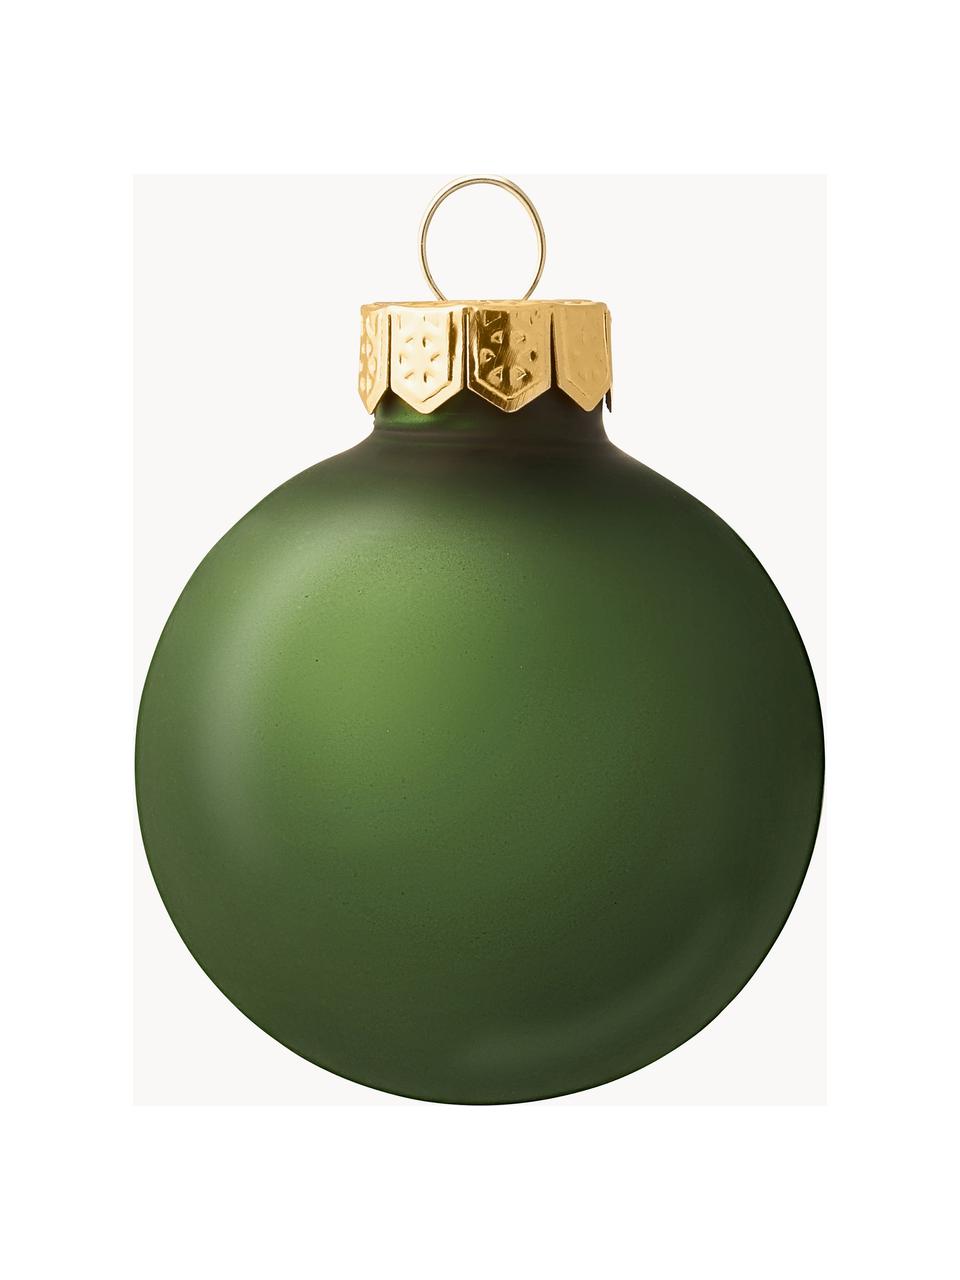 Komplet bombek Evergreen, różne rozmiary, Ciemny zielony, Ø 10 cm, 4 szt.